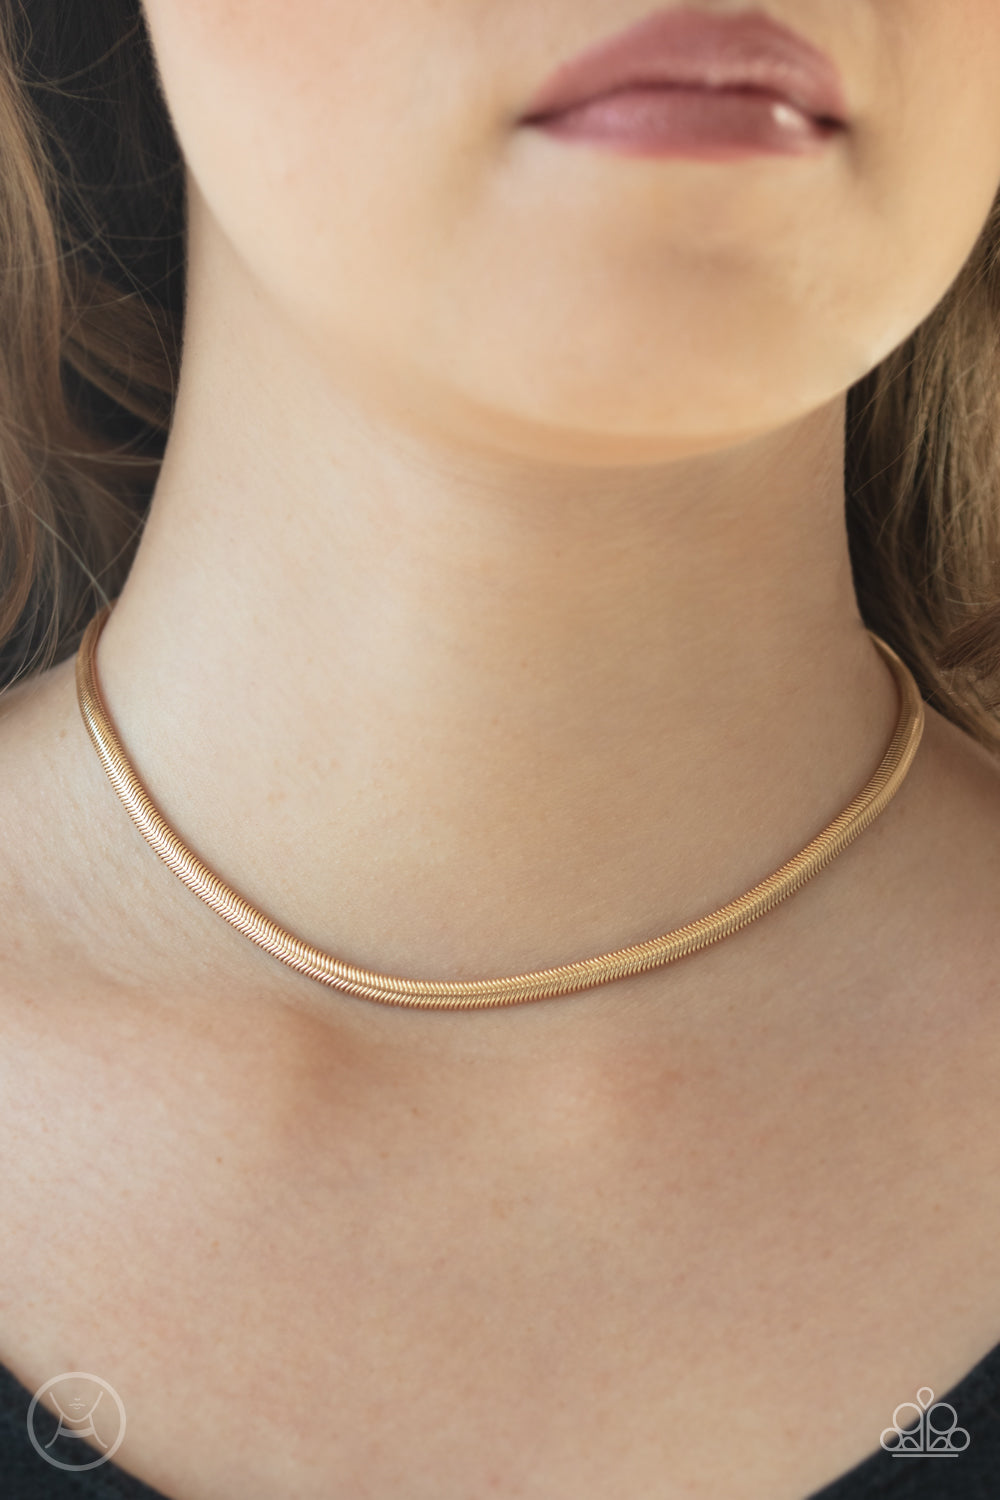 Flat Out Fierce - gold - Paparazzi necklace